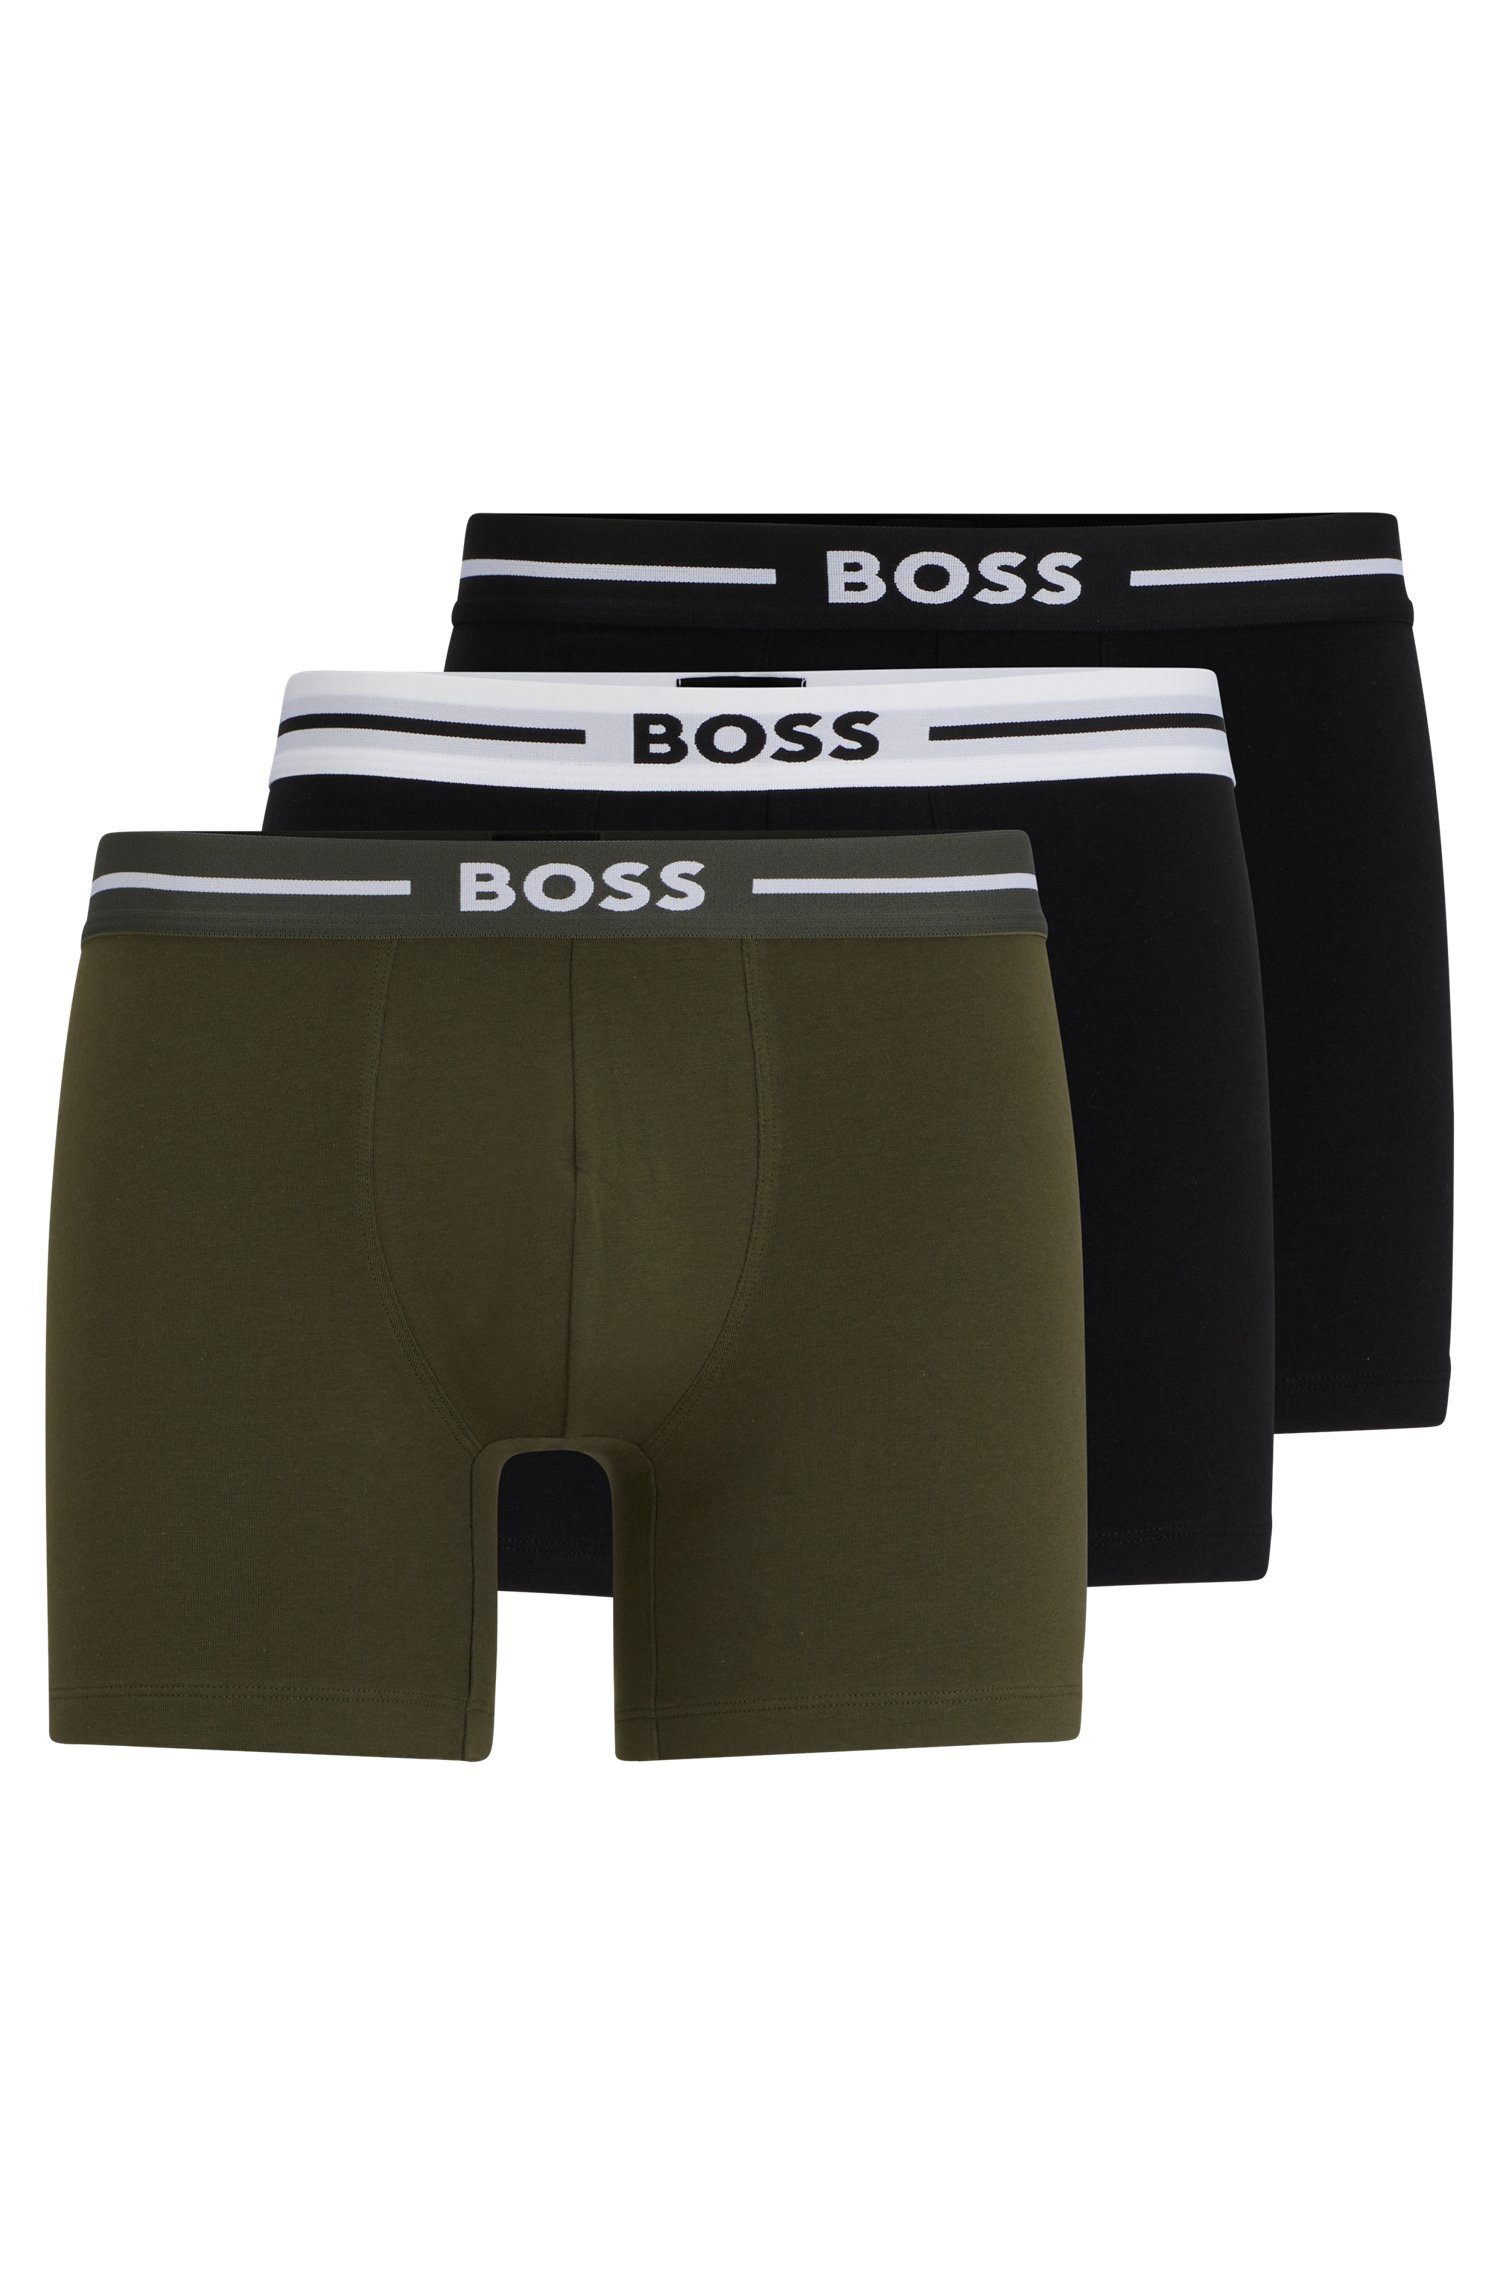 BOSS Boxershorts Br 3P Bold Schwarz/Khaki am Logoschriftzug (Packung, 3er) Bund mit